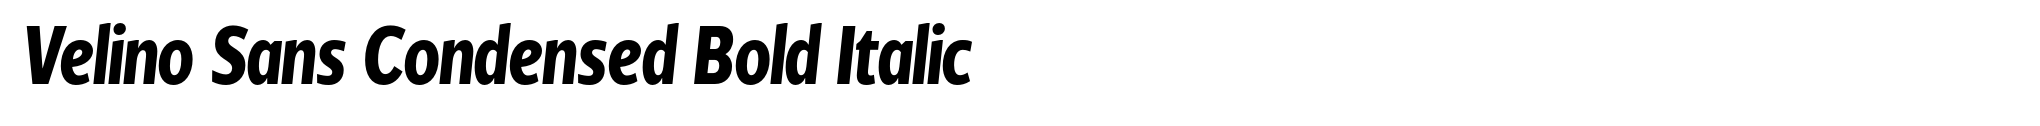 Velino Sans Condensed Bold Italic image